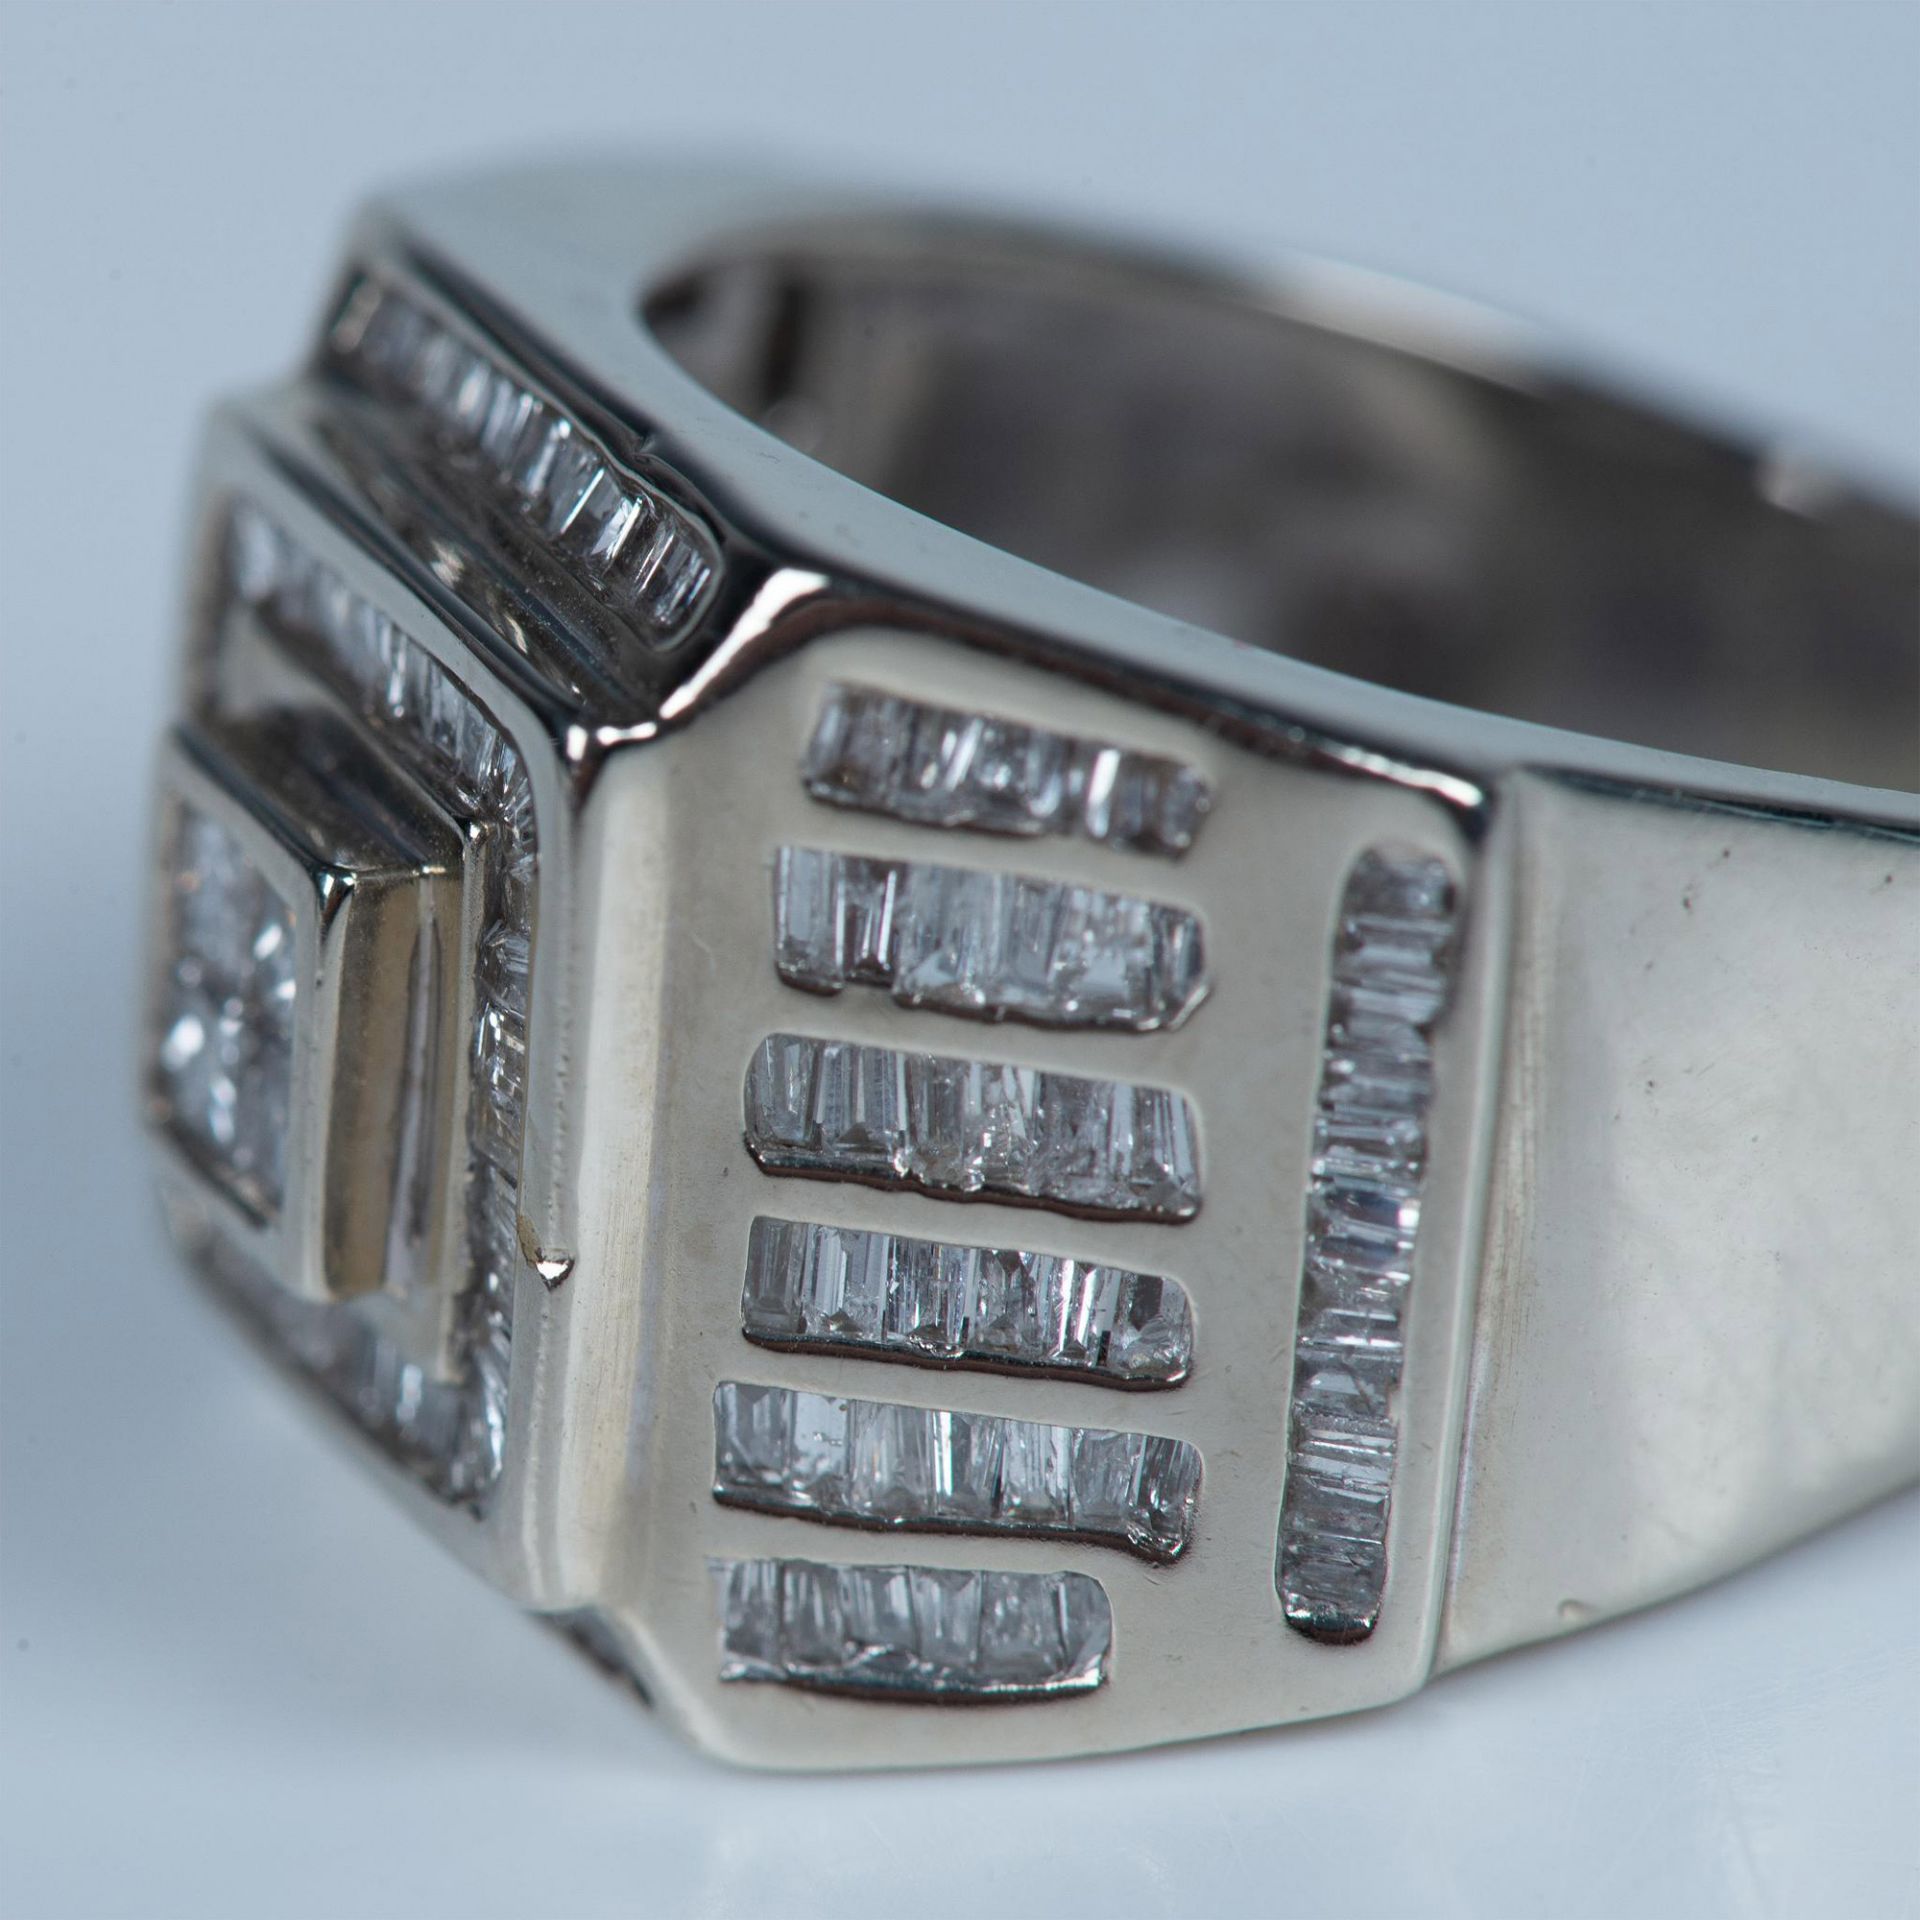 Striking 14K White Gold and 132-Diamond Ring - Image 7 of 7